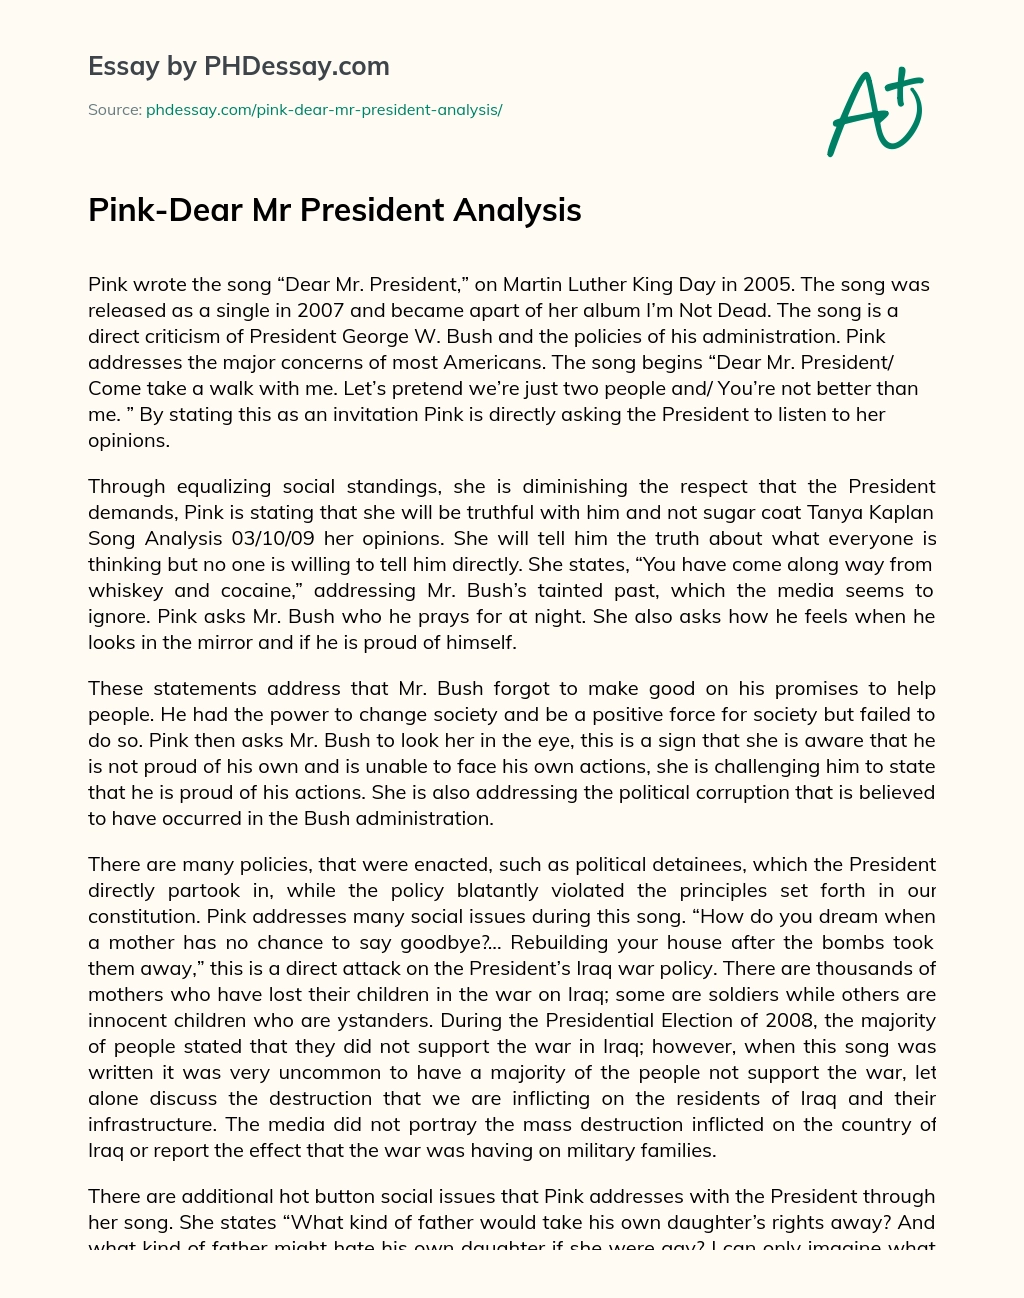 Pink-Dear Mr President Analysis essay